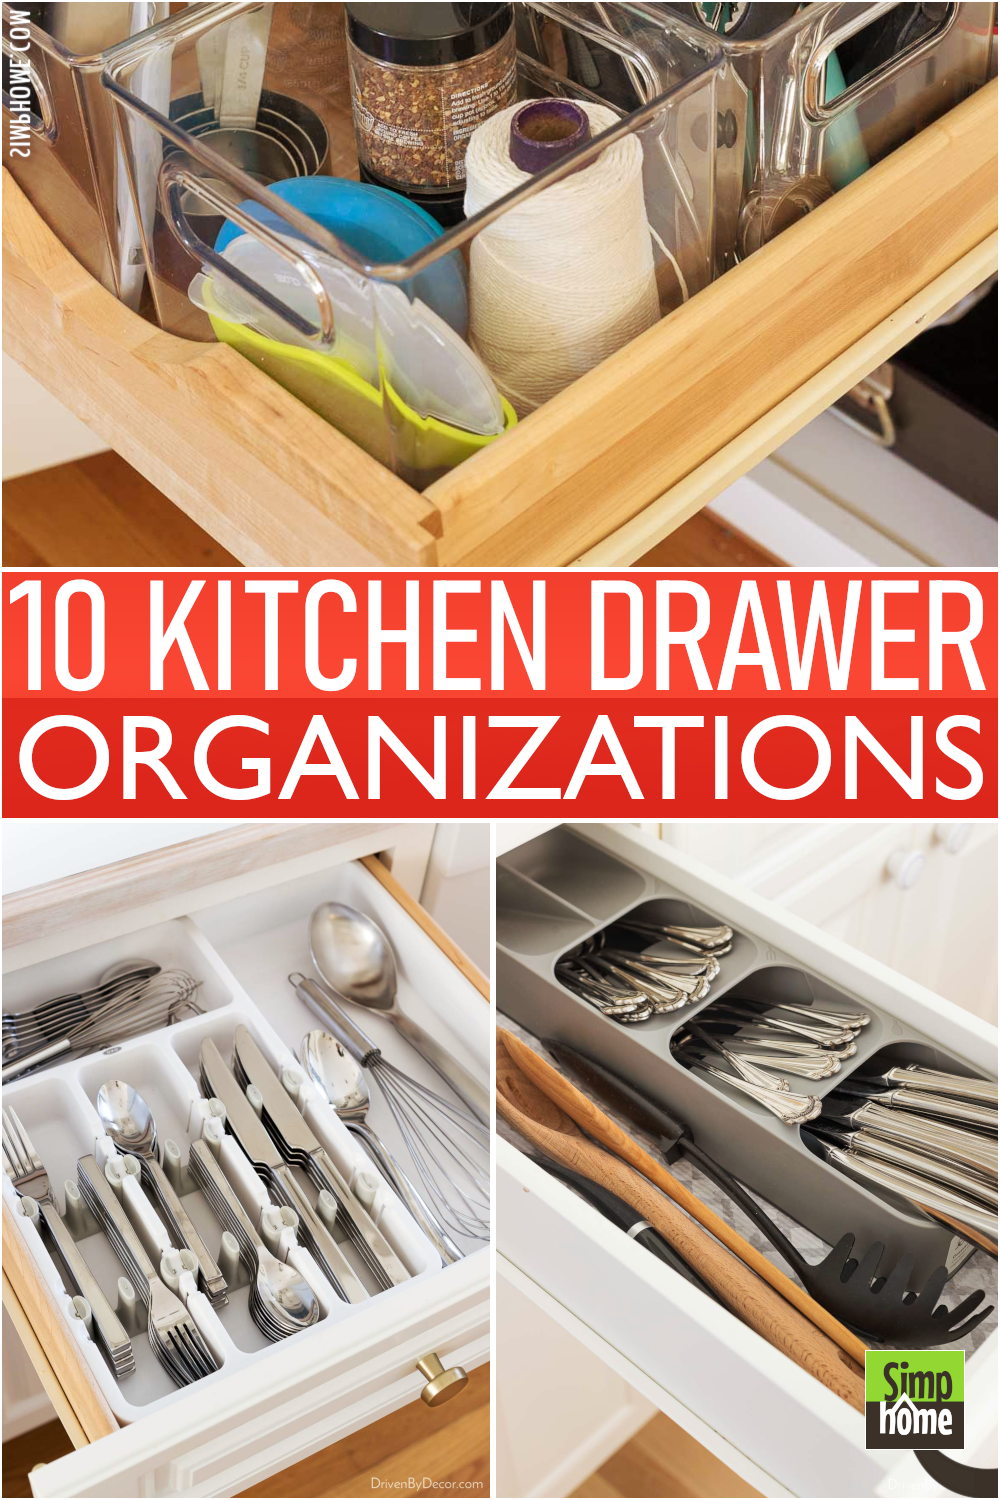 10 Kitchen Drawer Organizations via Simphome.com poster